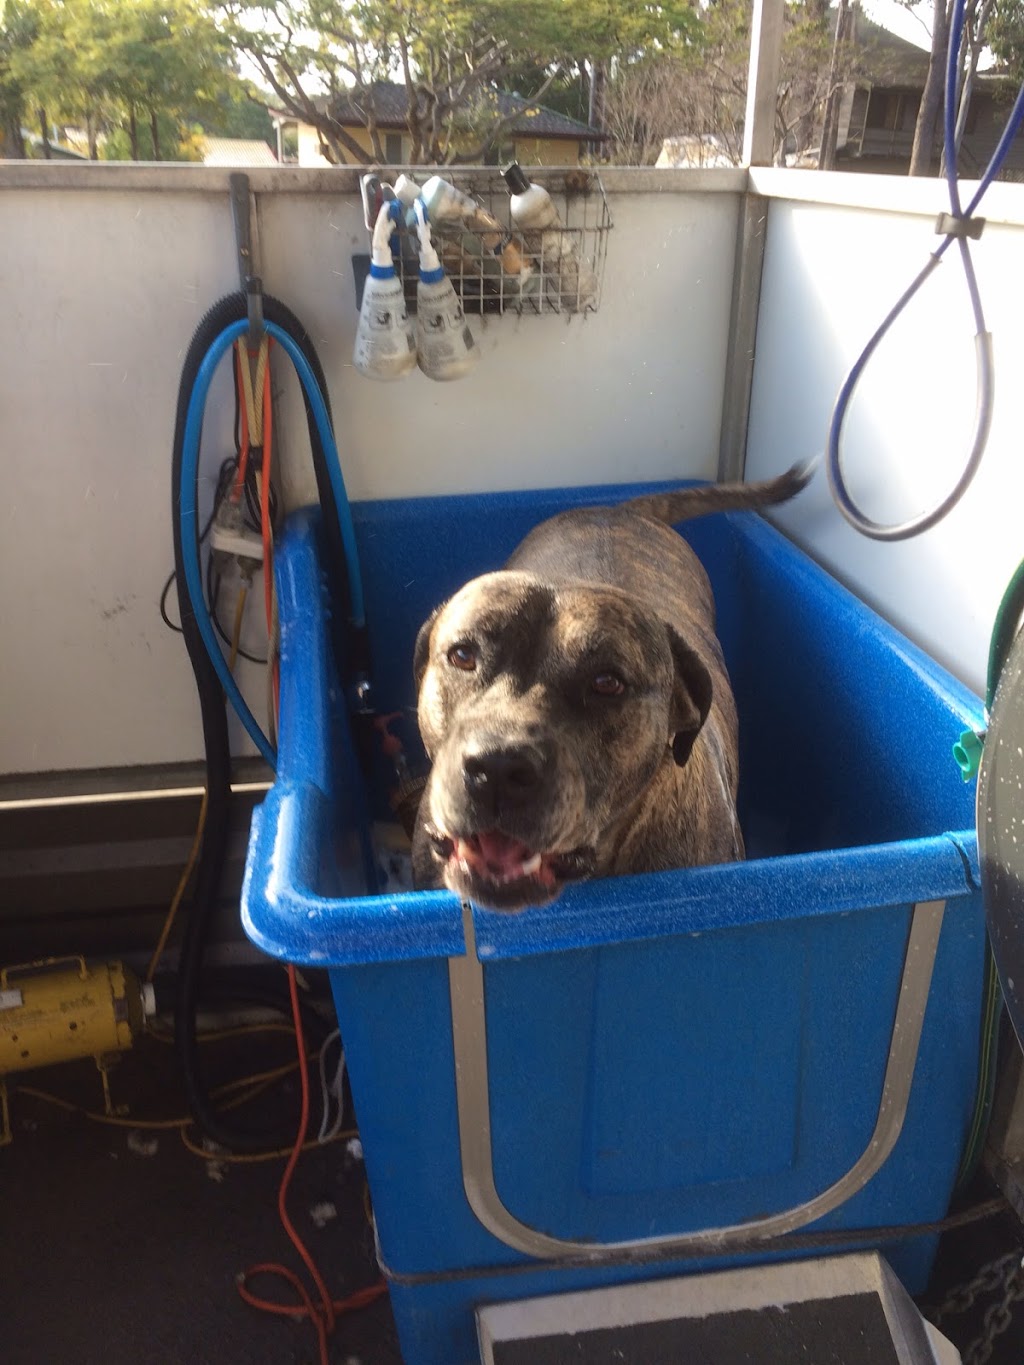 My Dirty Dog - Mobile Washing and Grooming |  | 40 Dawson Rd, Alexandra Hills QLD 4161, Australia | 0412835362 OR +61 412 835 362